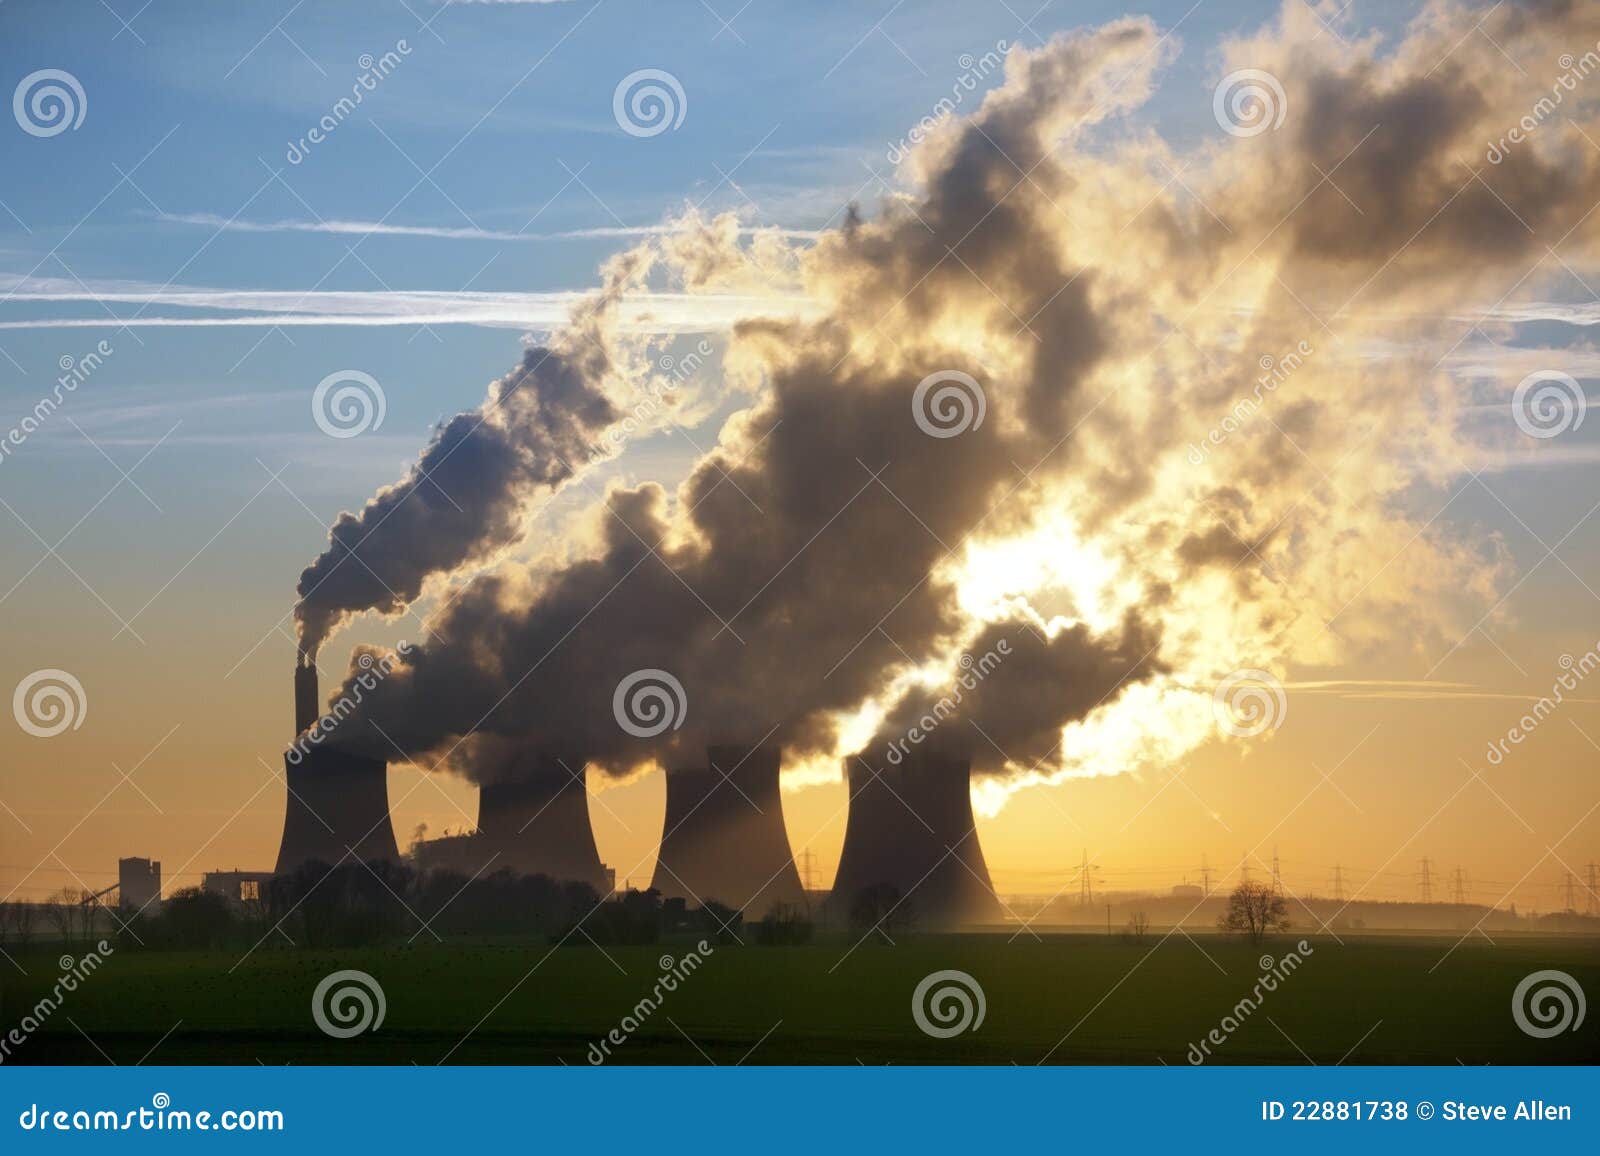 power plant - greenhouse gases - uk